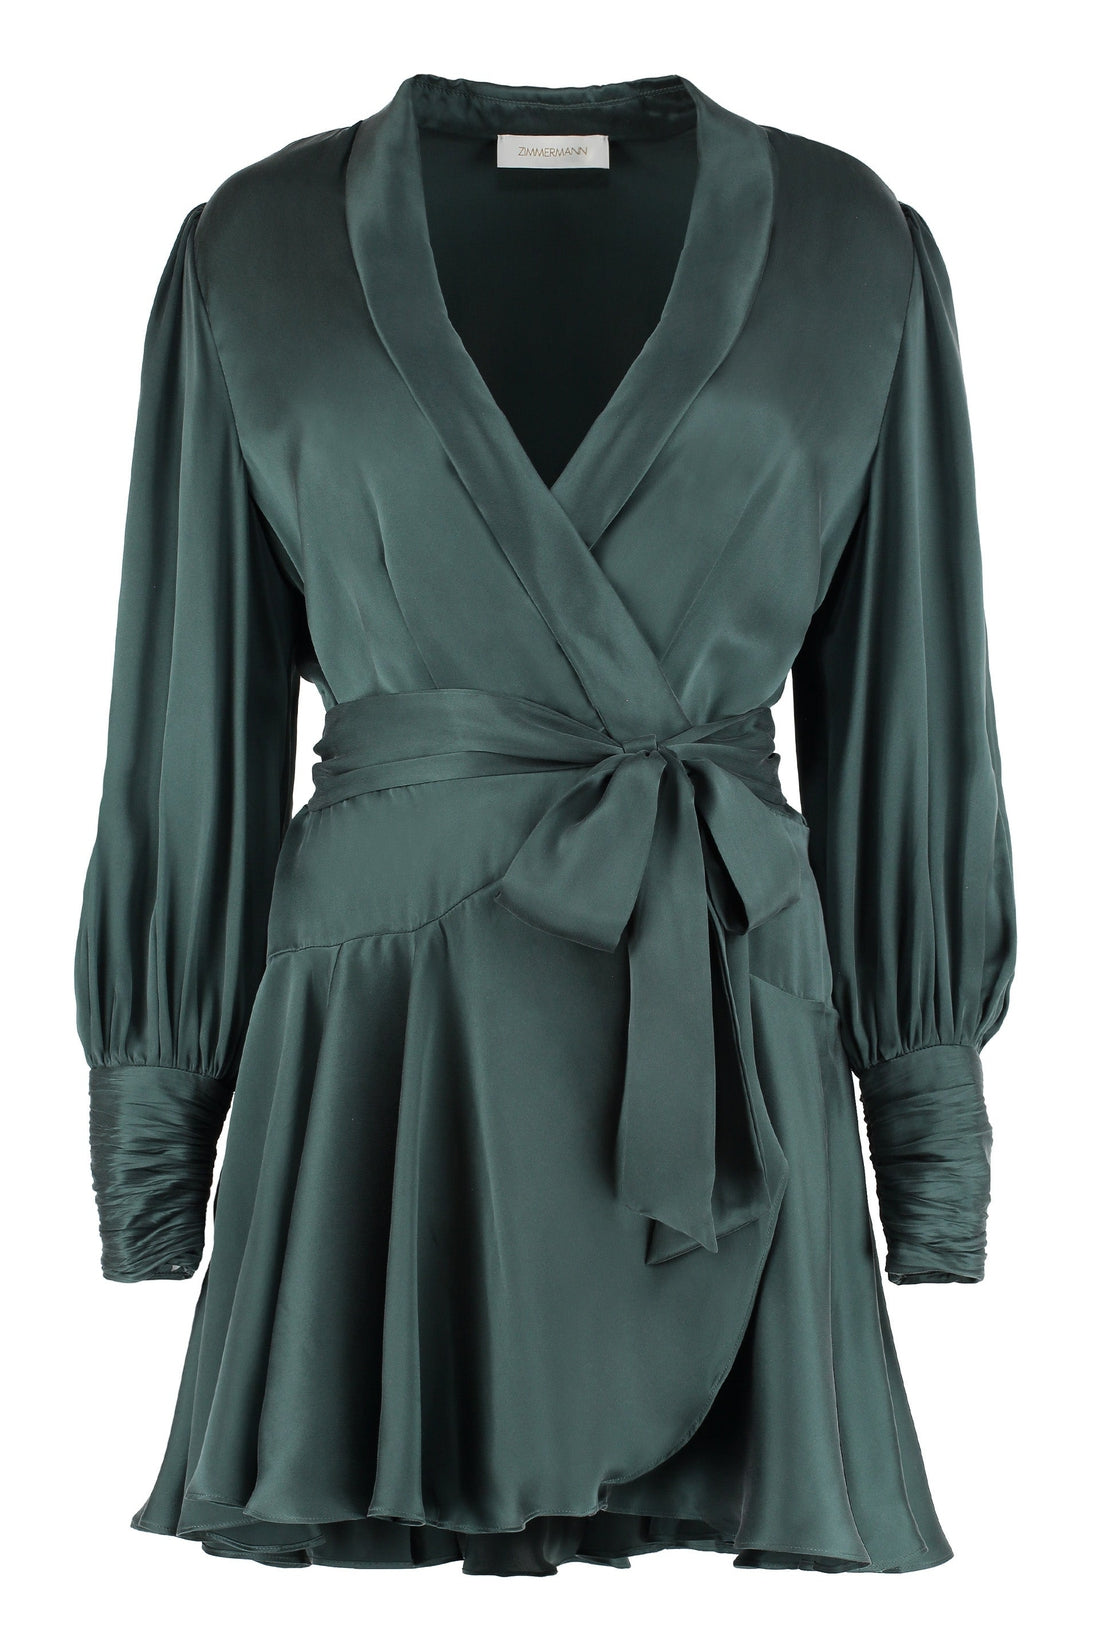 Zimmermann-OUTLET-SALE-Silk wrap-dress-ARCHIVIST